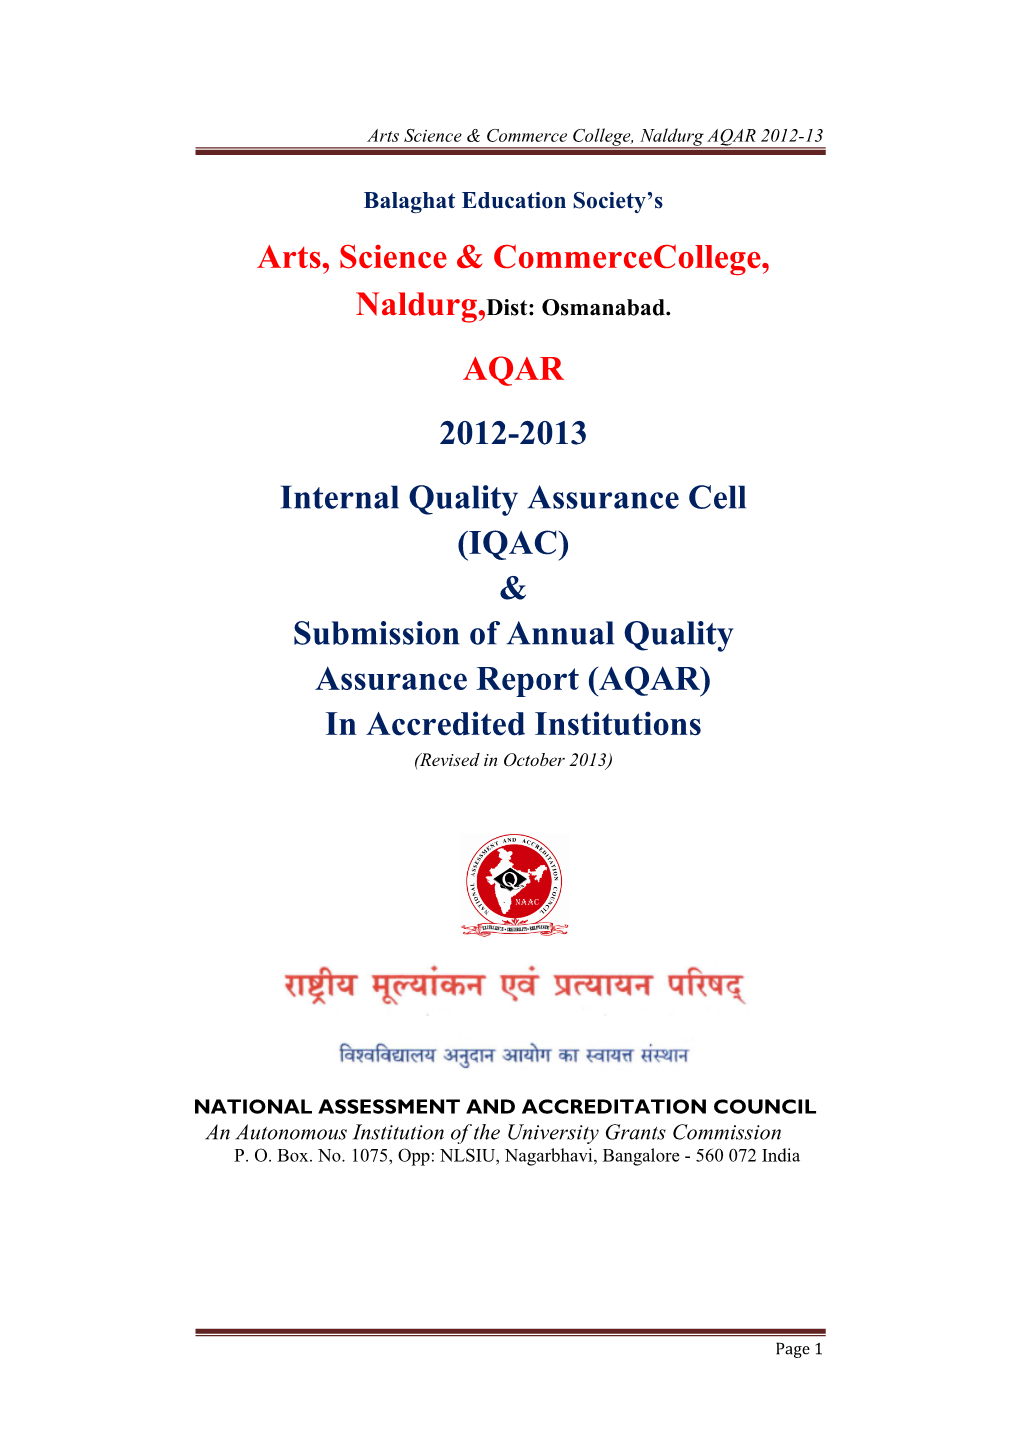 Arts, Science & Commercecollege, AQAR 2012-2013 Internal Quality